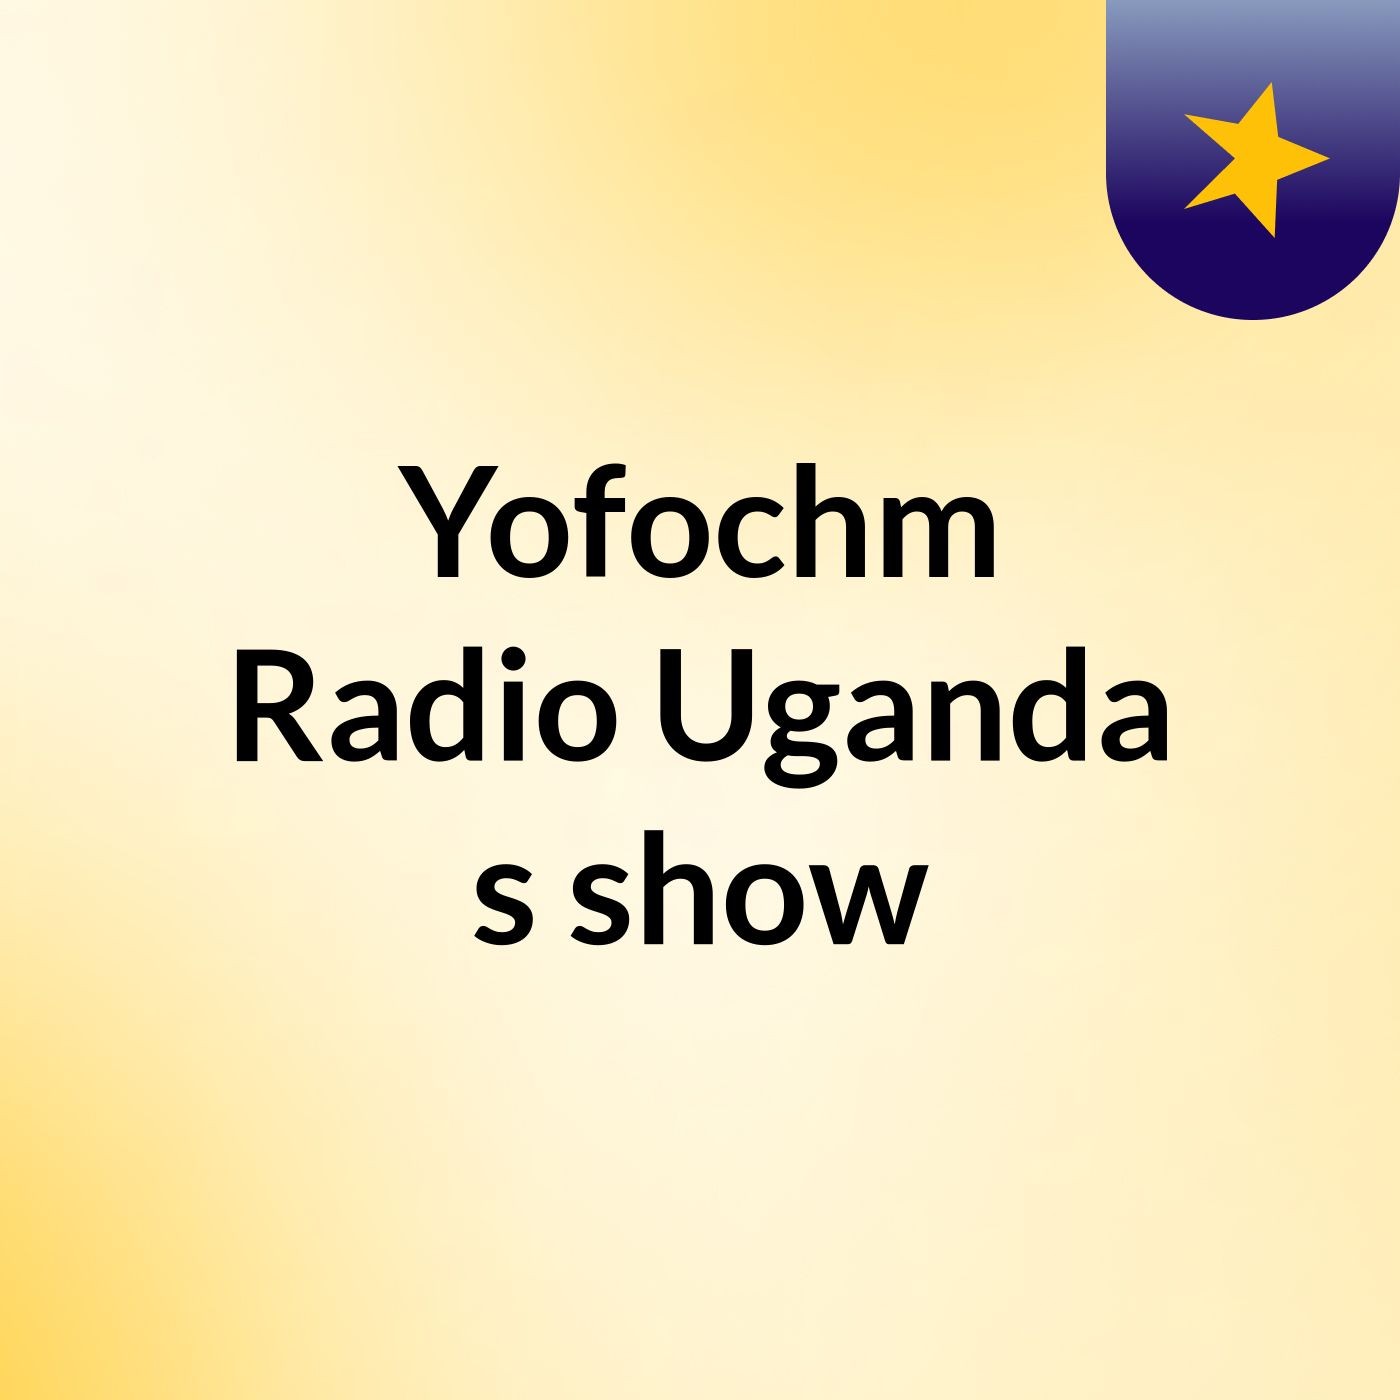 Yofochm Radio Uganda's show